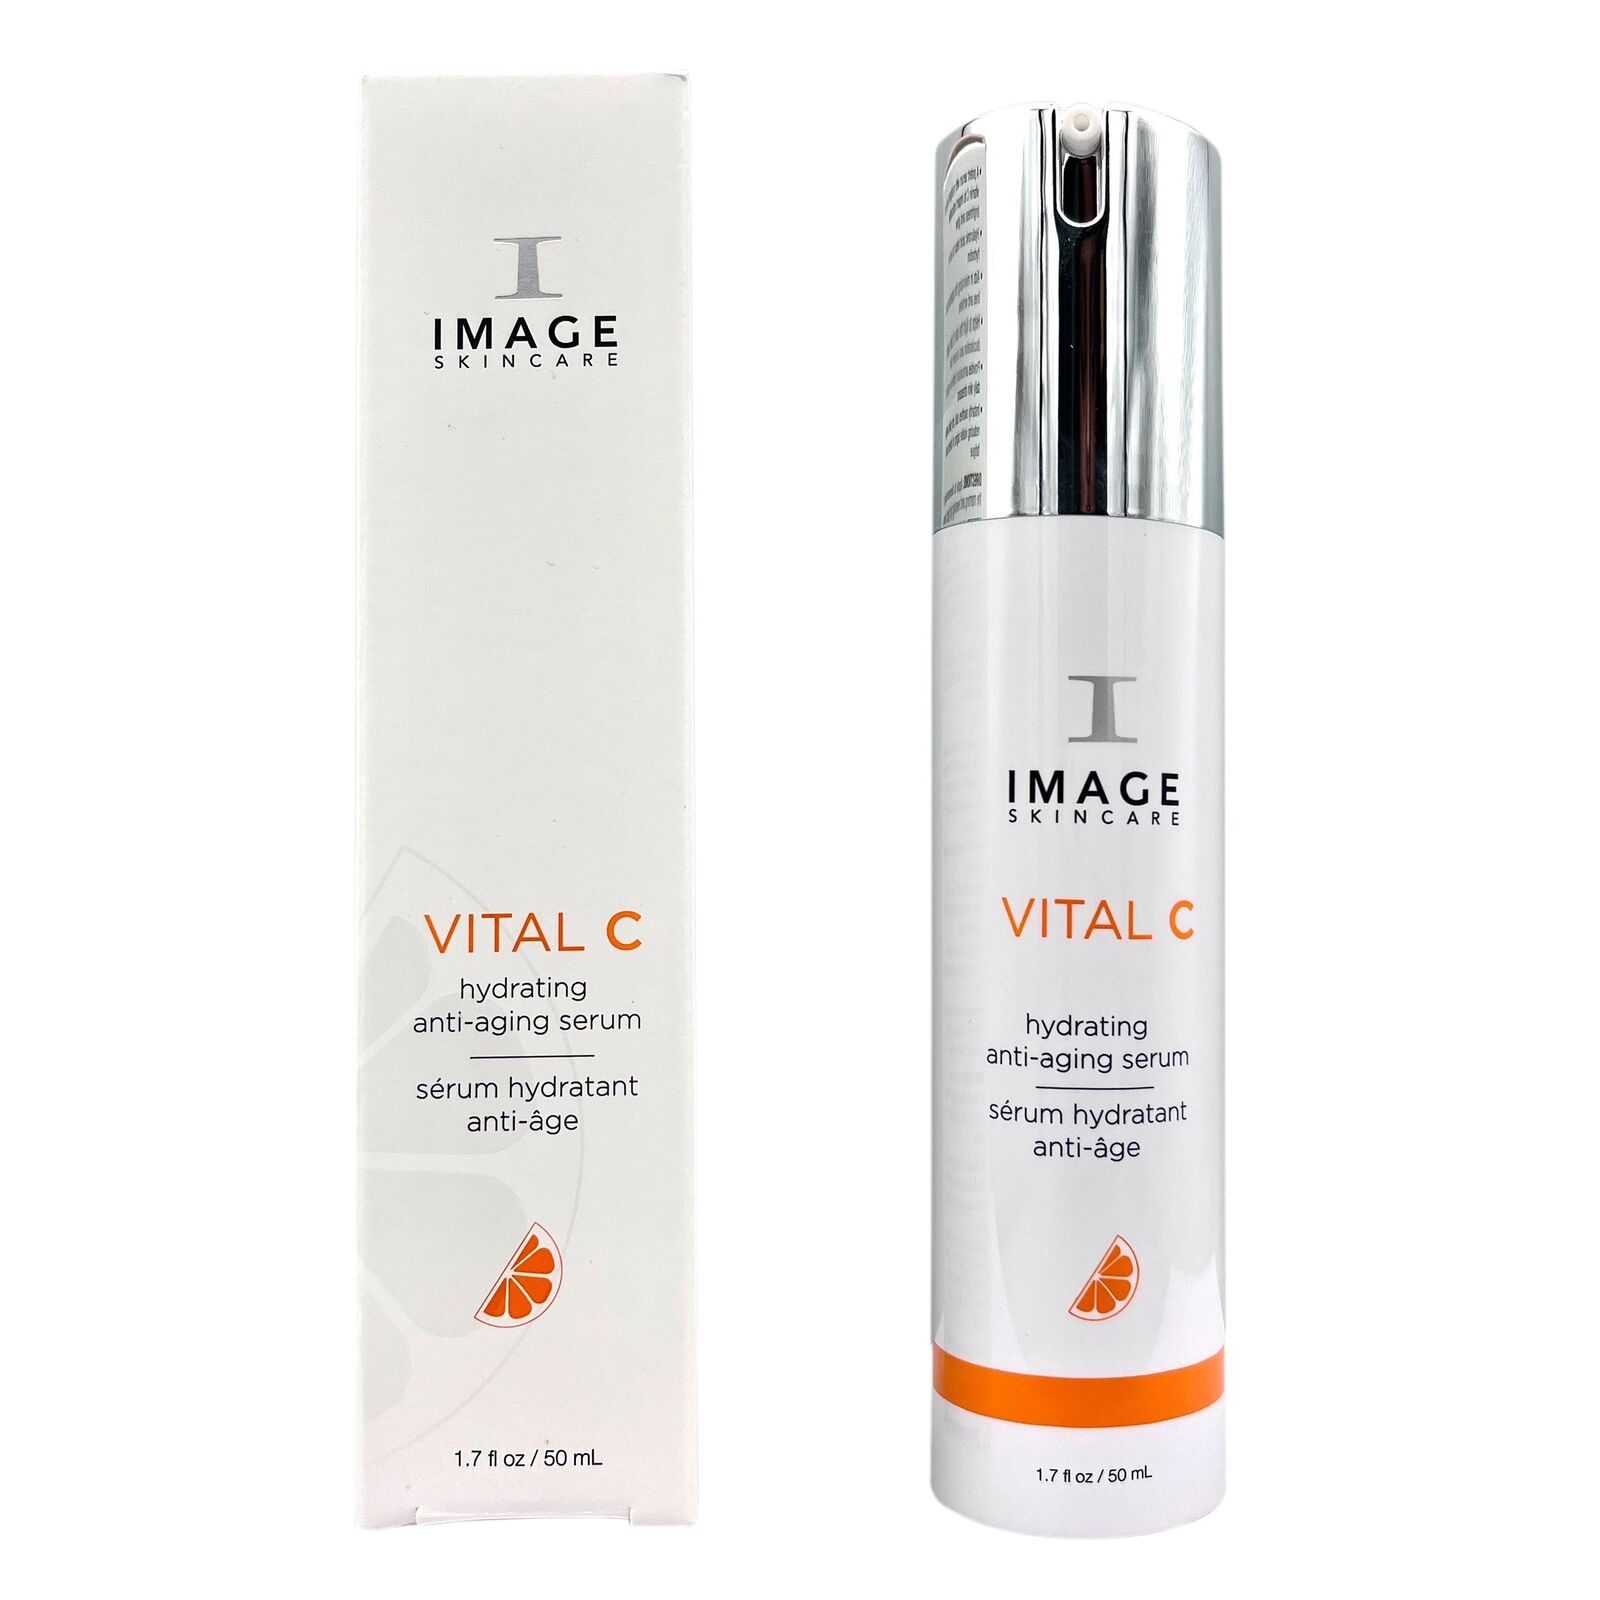 Image Skincare VITAL C Hydrating Anti-Aging Serum - 1.7 fl oz